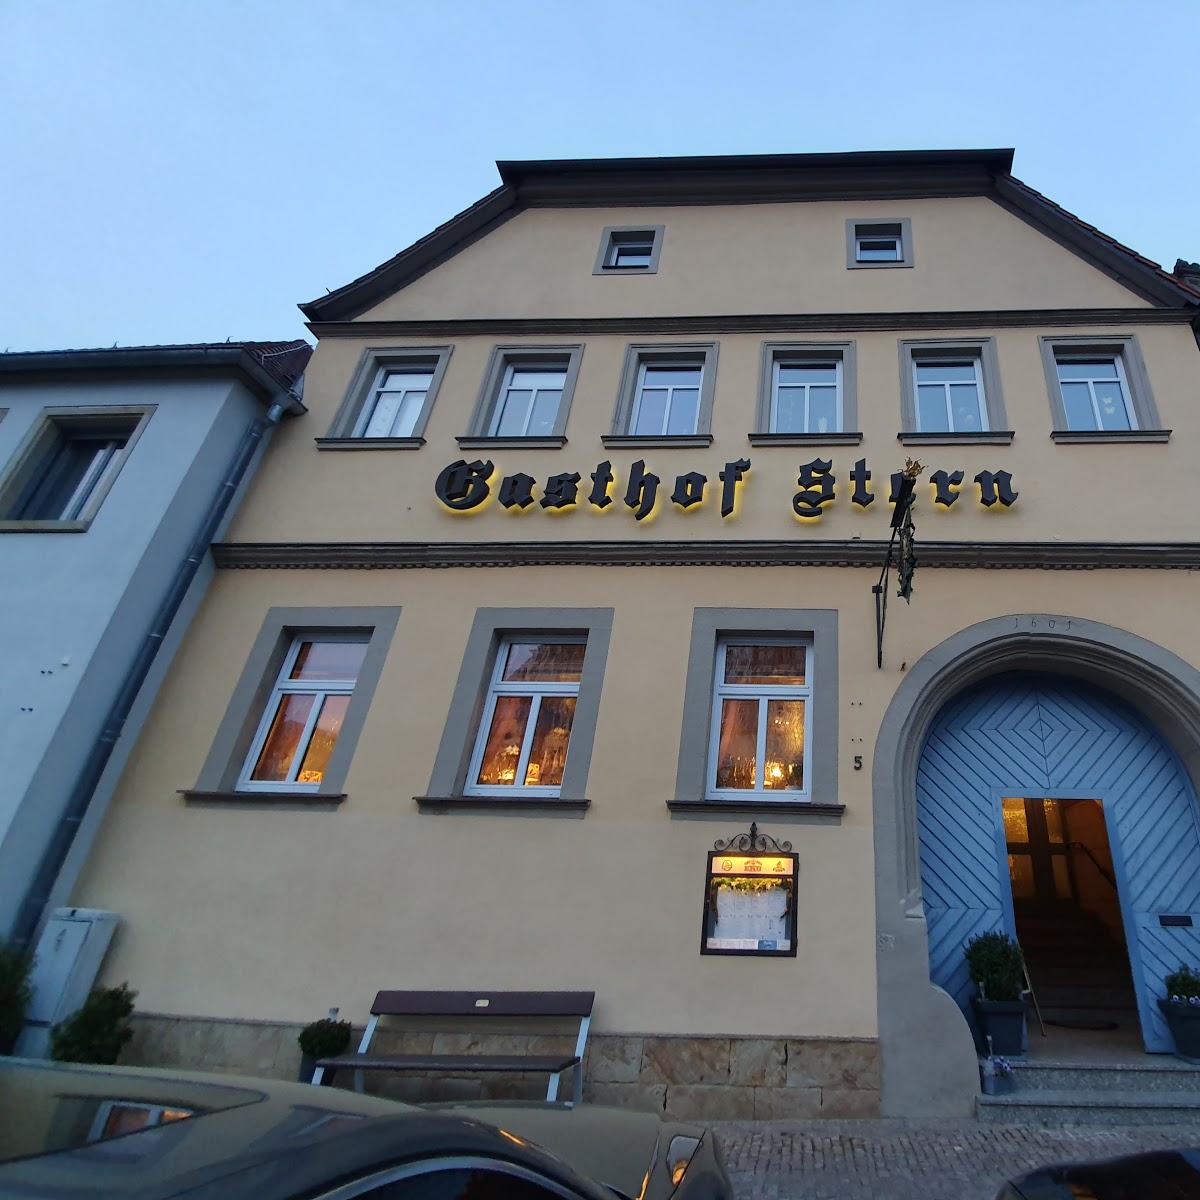 Restaurant "Gasthof Stern" in  Ebern